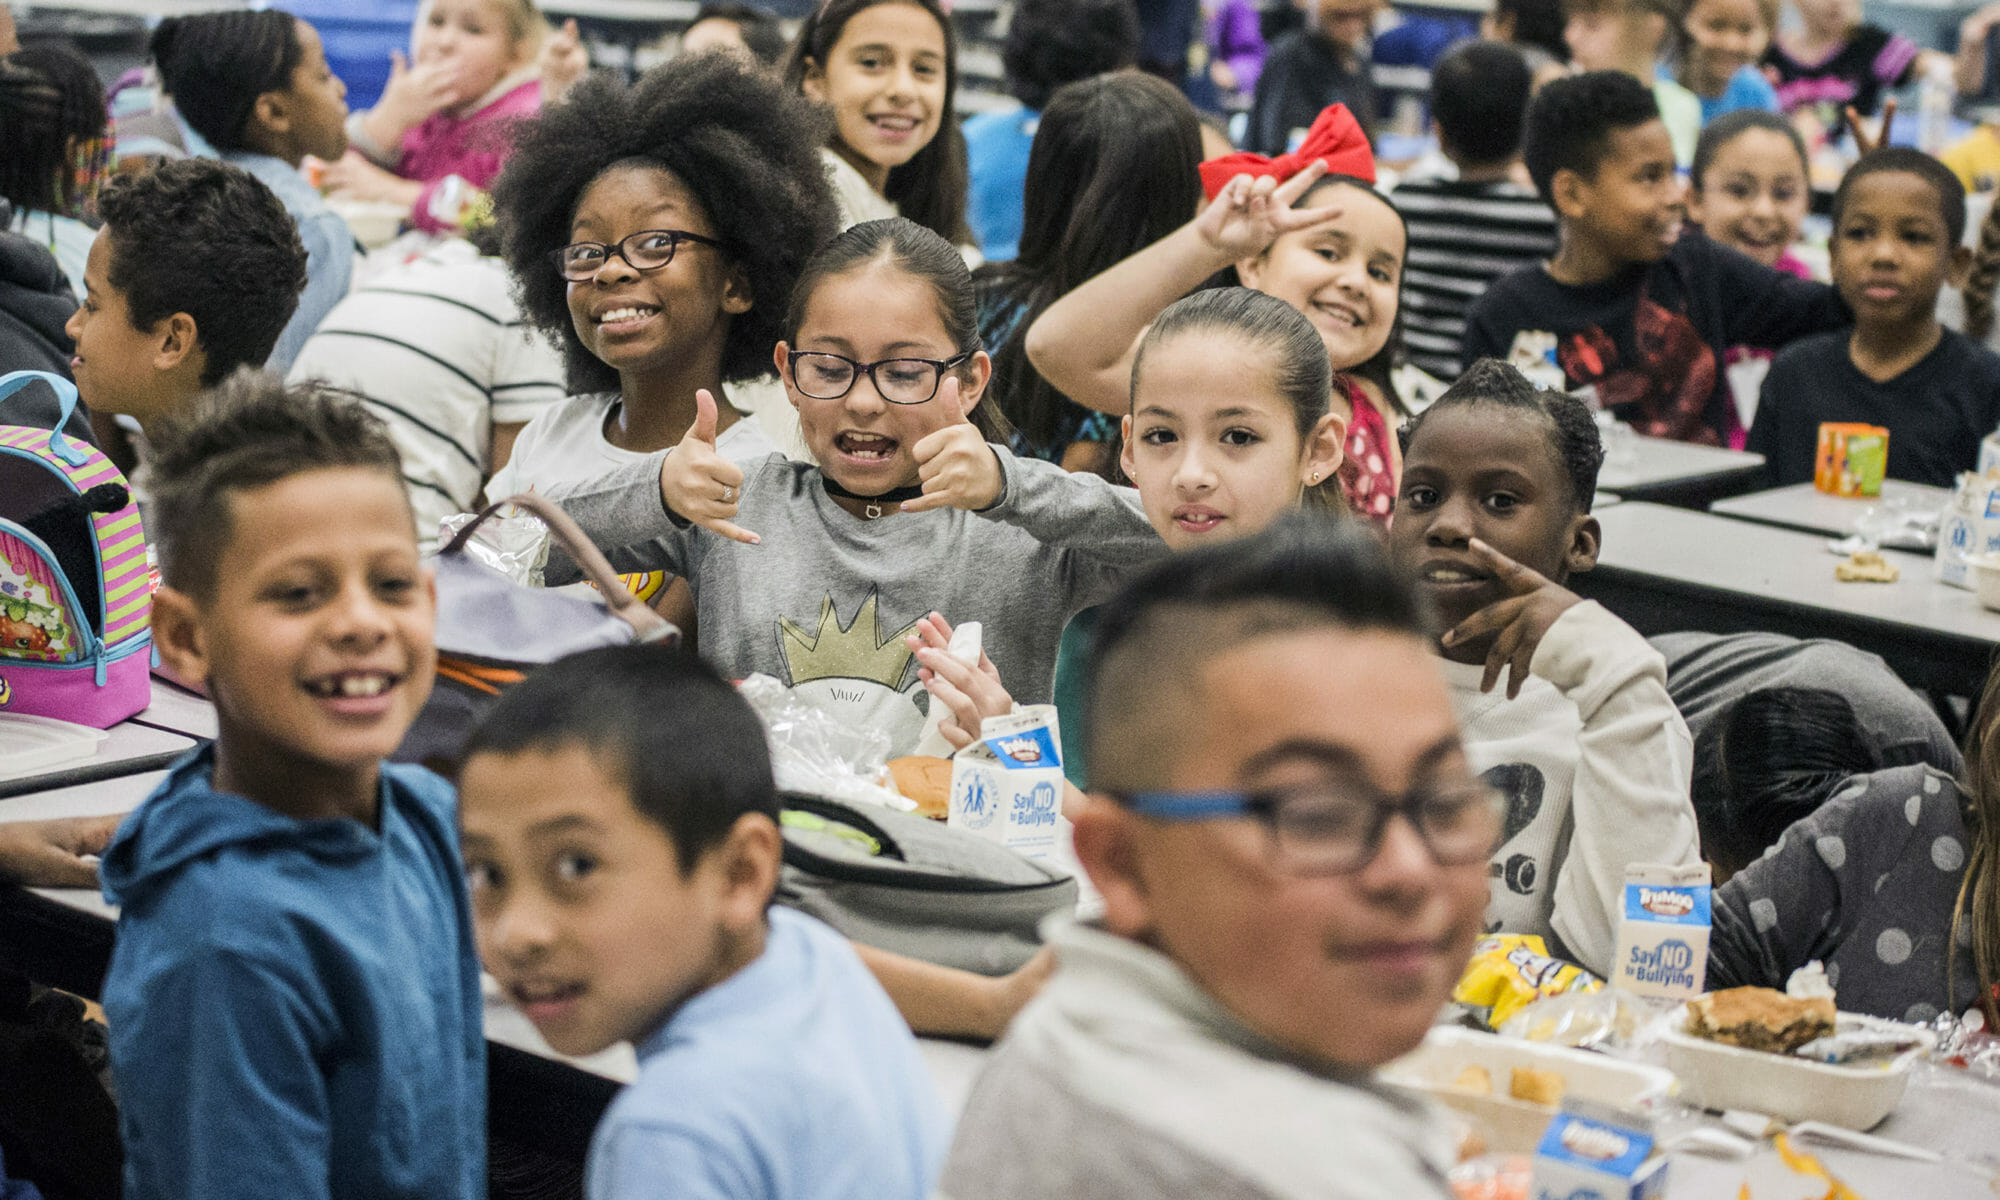 Students at Richard C. Priest Elementary School in North Las Vegas smiling